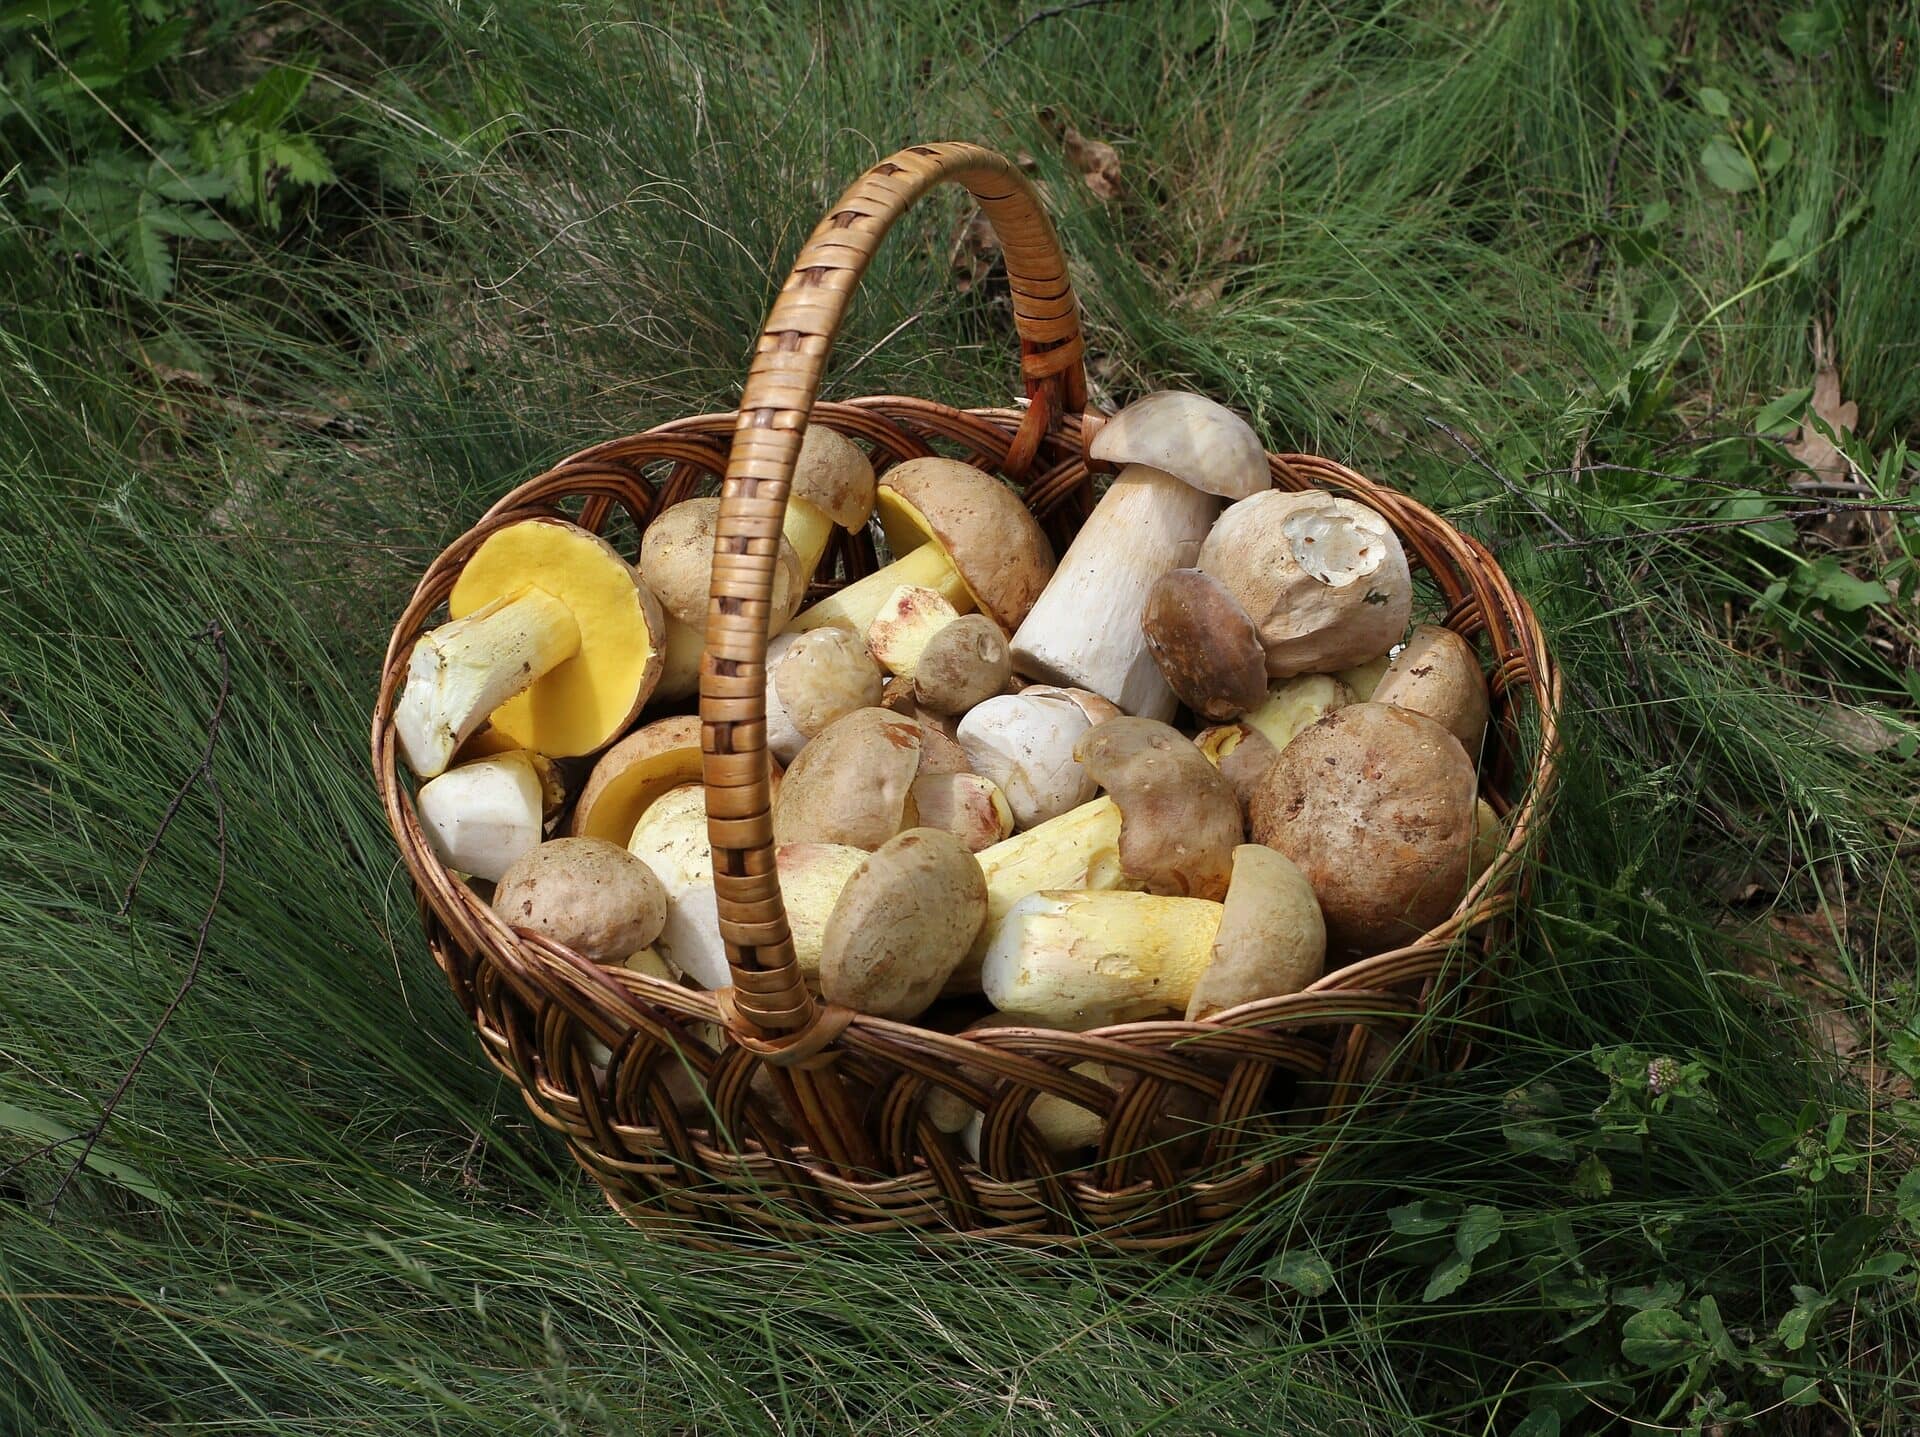 Image: Porcini mushrooms in a basket!